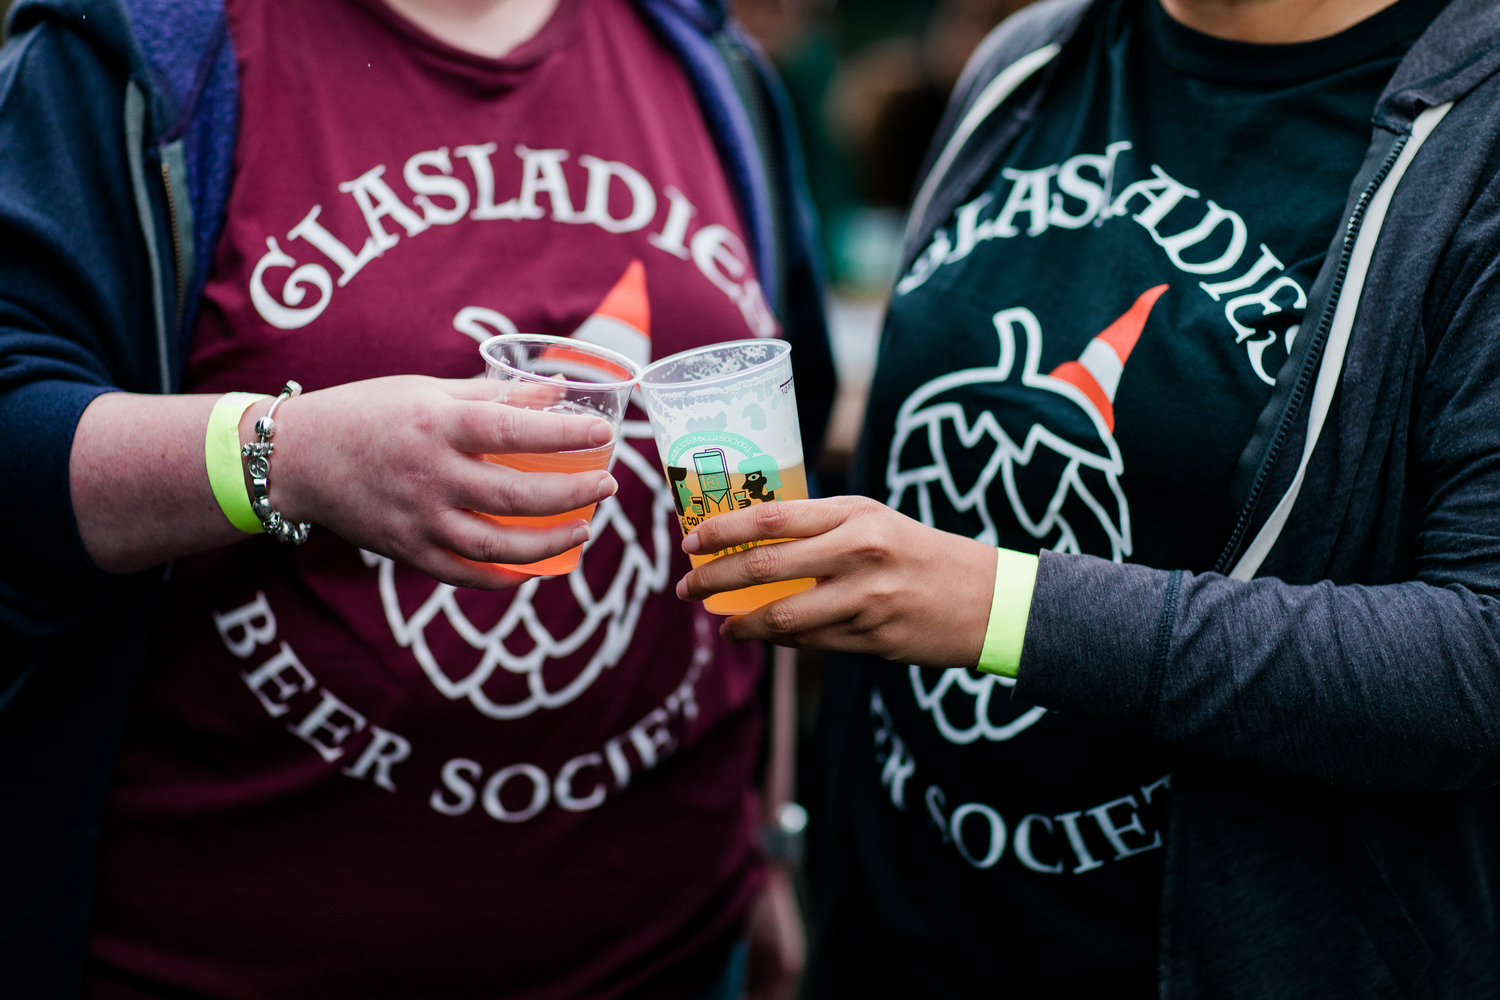 Glasladies’ festival raises cash for city charity thumbnail